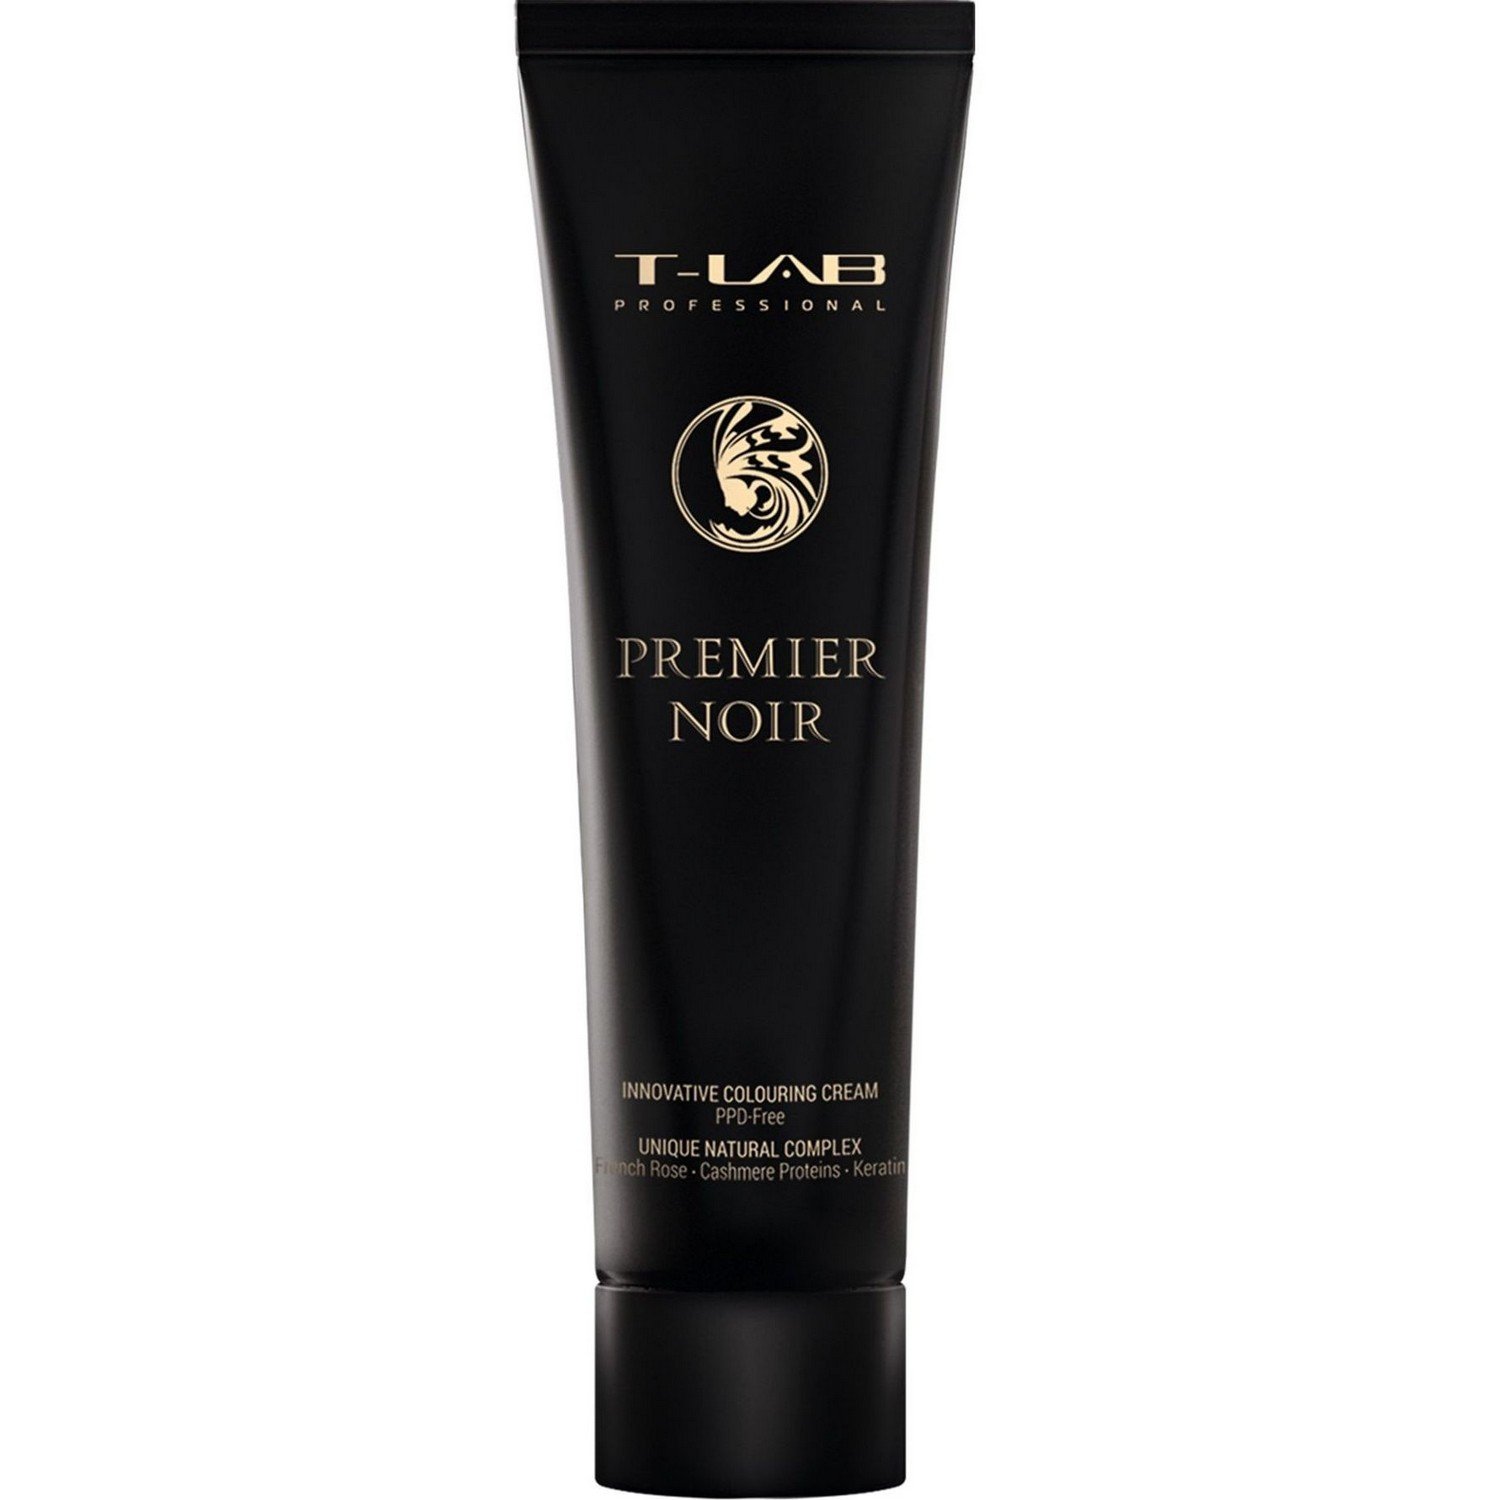 Крем-фарба T-LAB Professional Premier Noir colouring cream, відтінок 9.1 (very light ash blonde) - фото 1